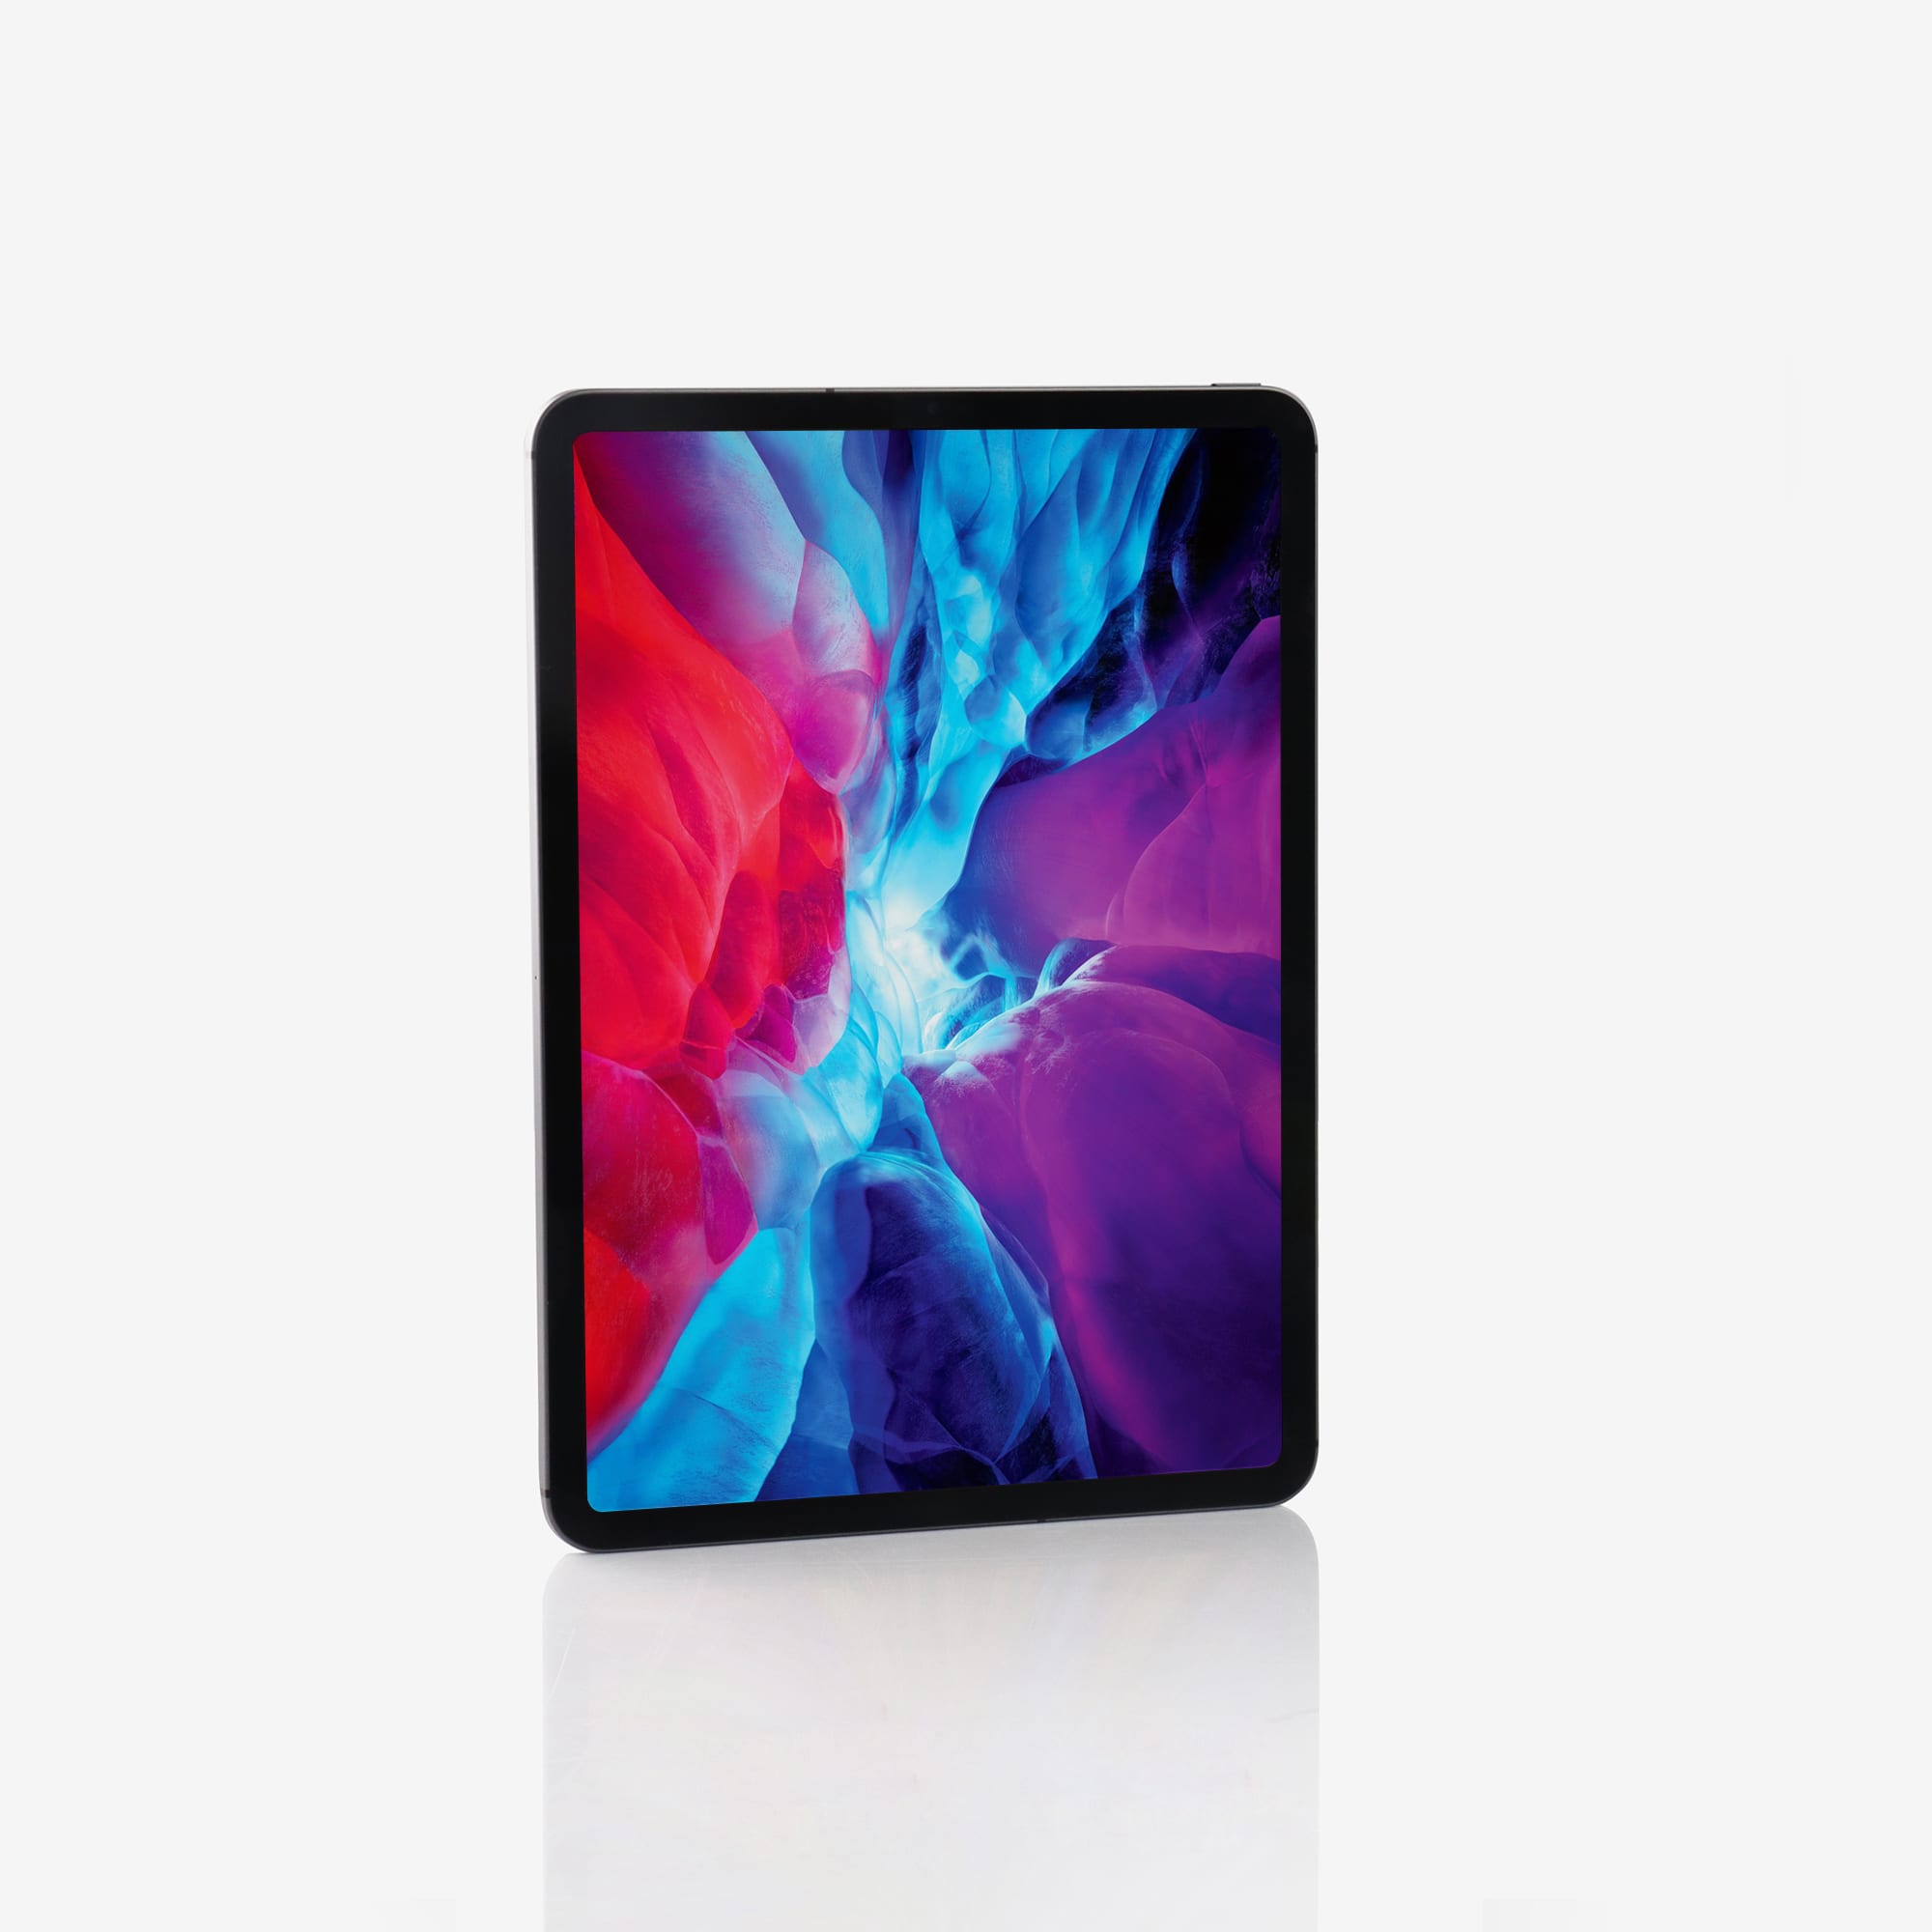 1 x iPad Pro (11-inch) (Wi-Fi + Cellular) Space Grey (2017)